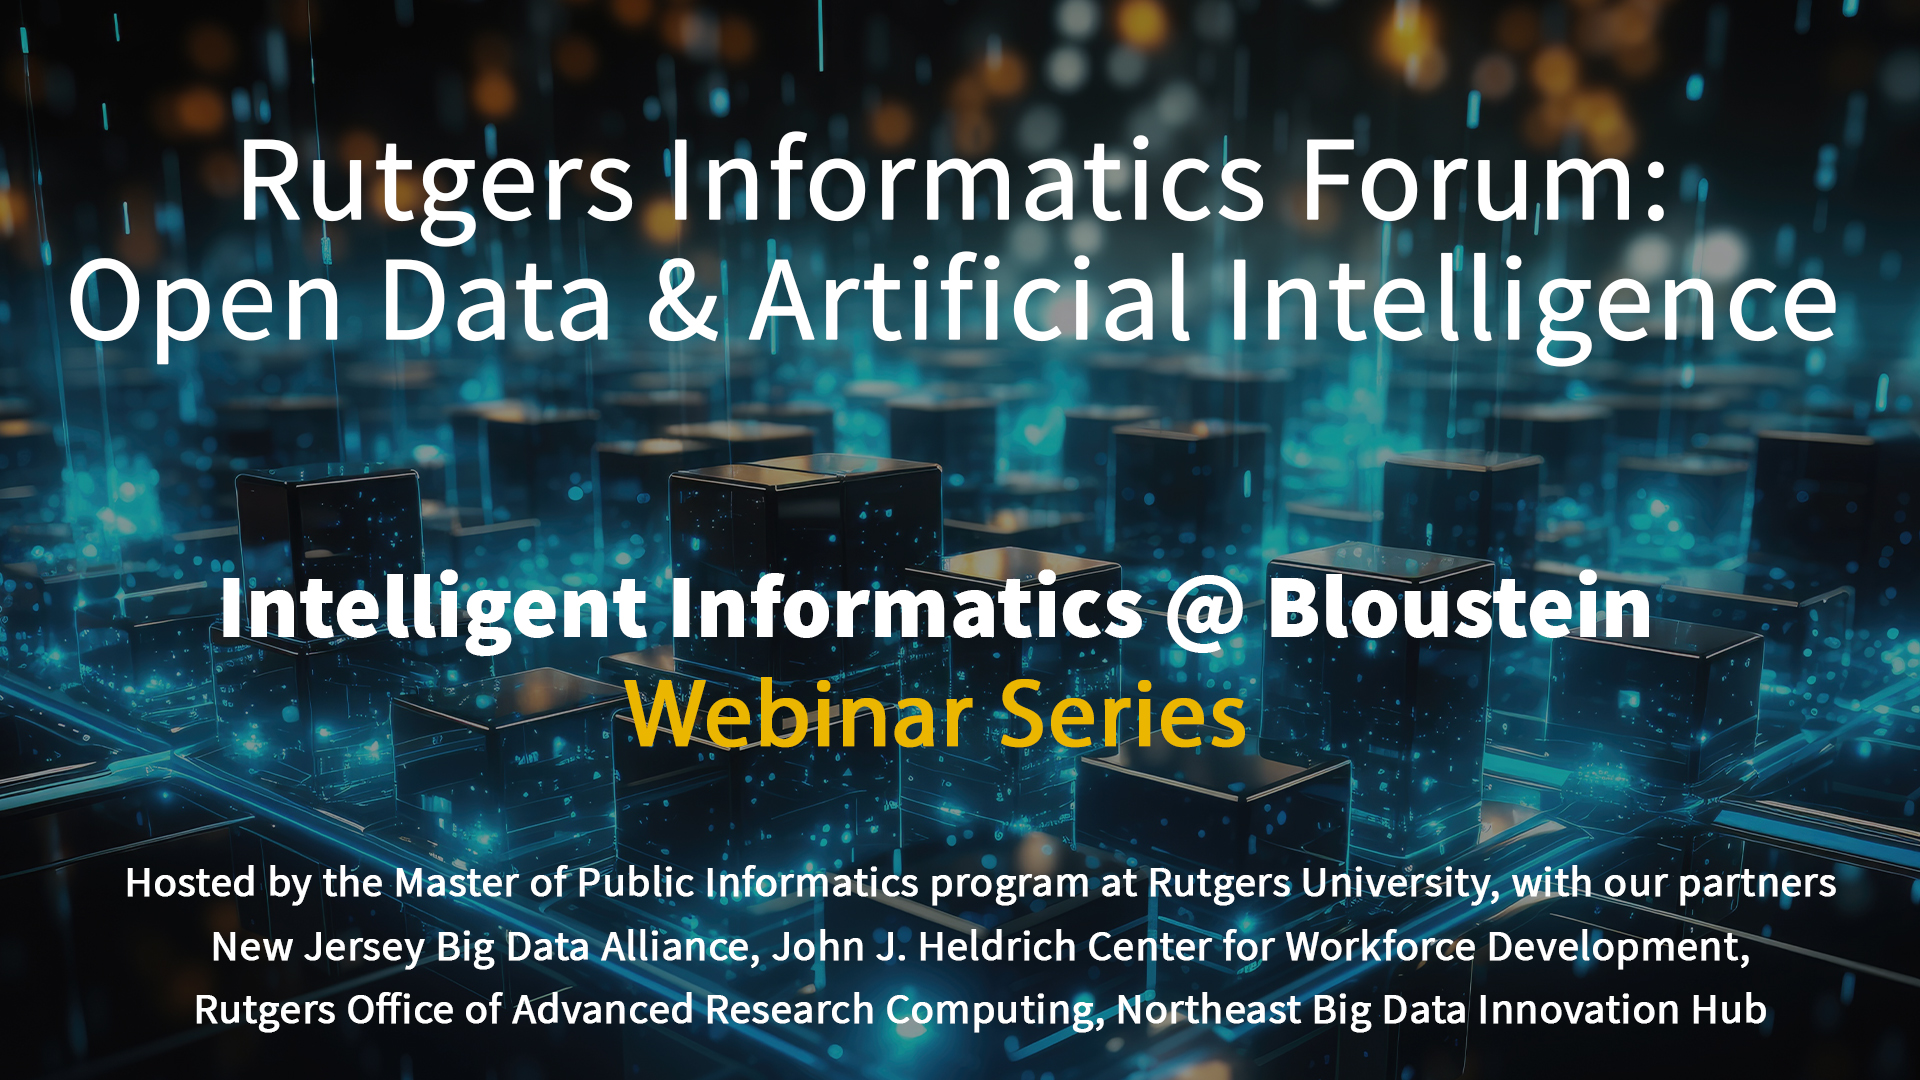 Intelligent Informatics at Bloustein panel webinar